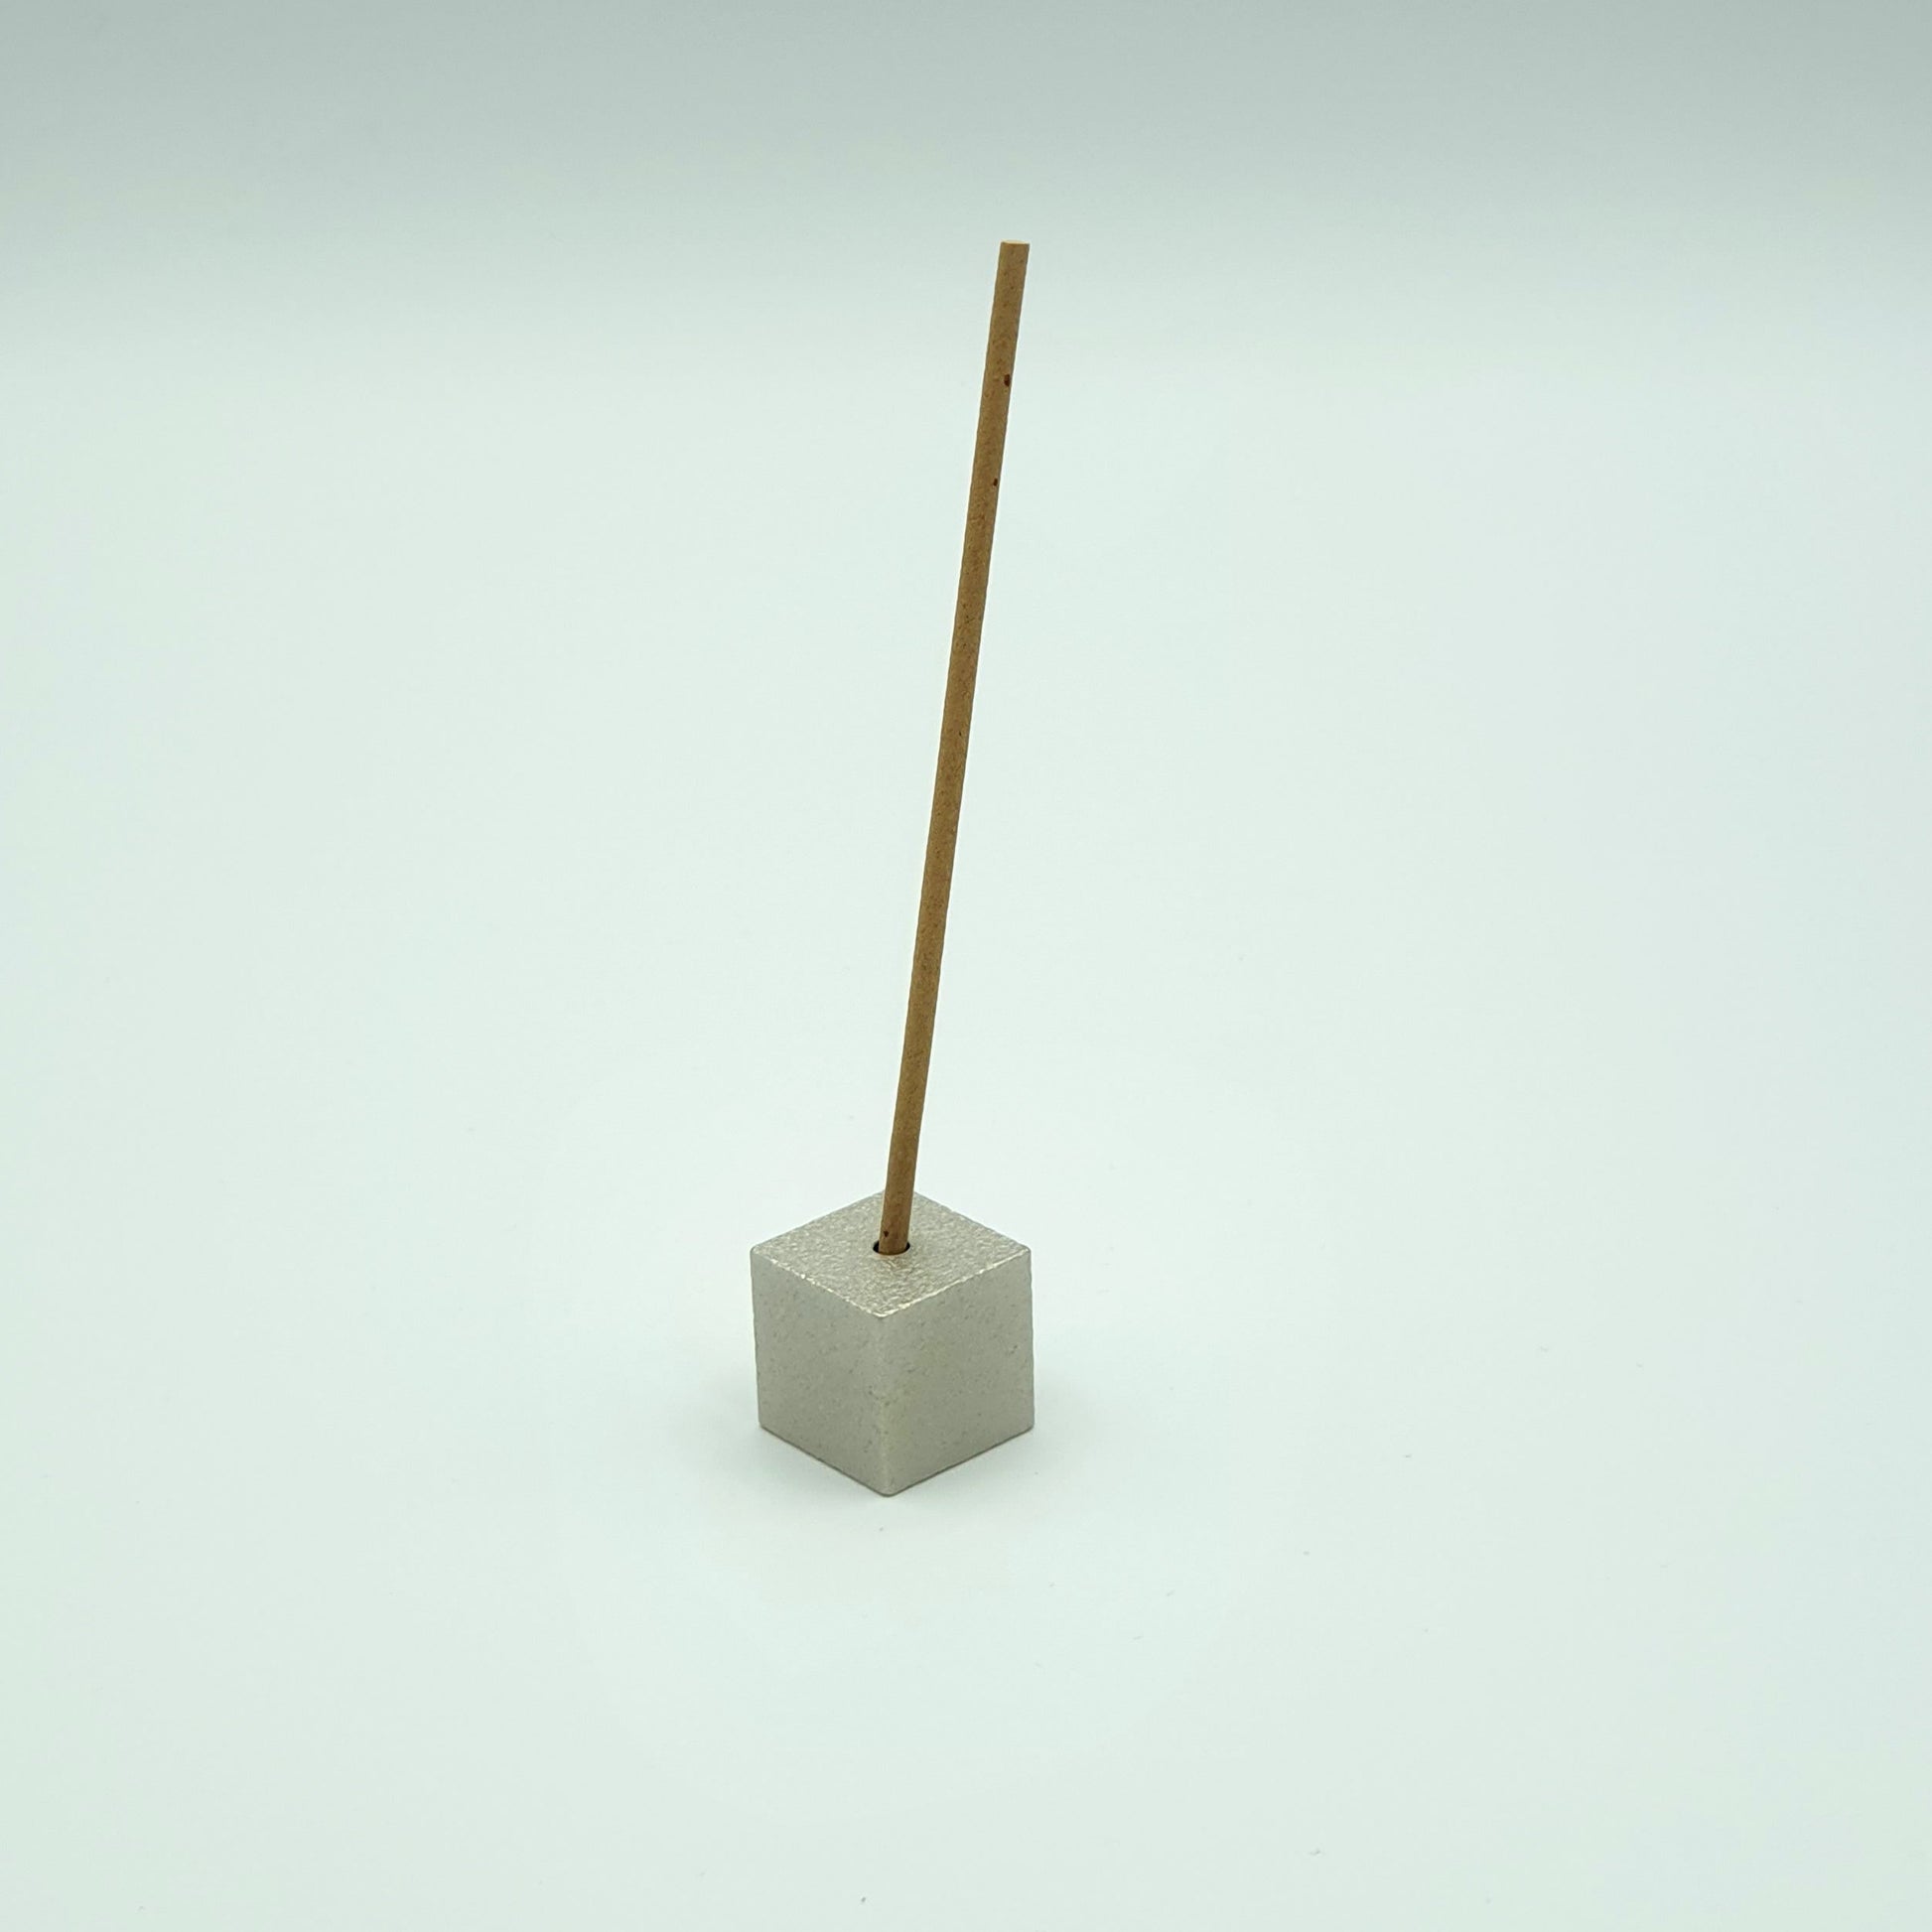 Incense Holder - Cube Silver Large